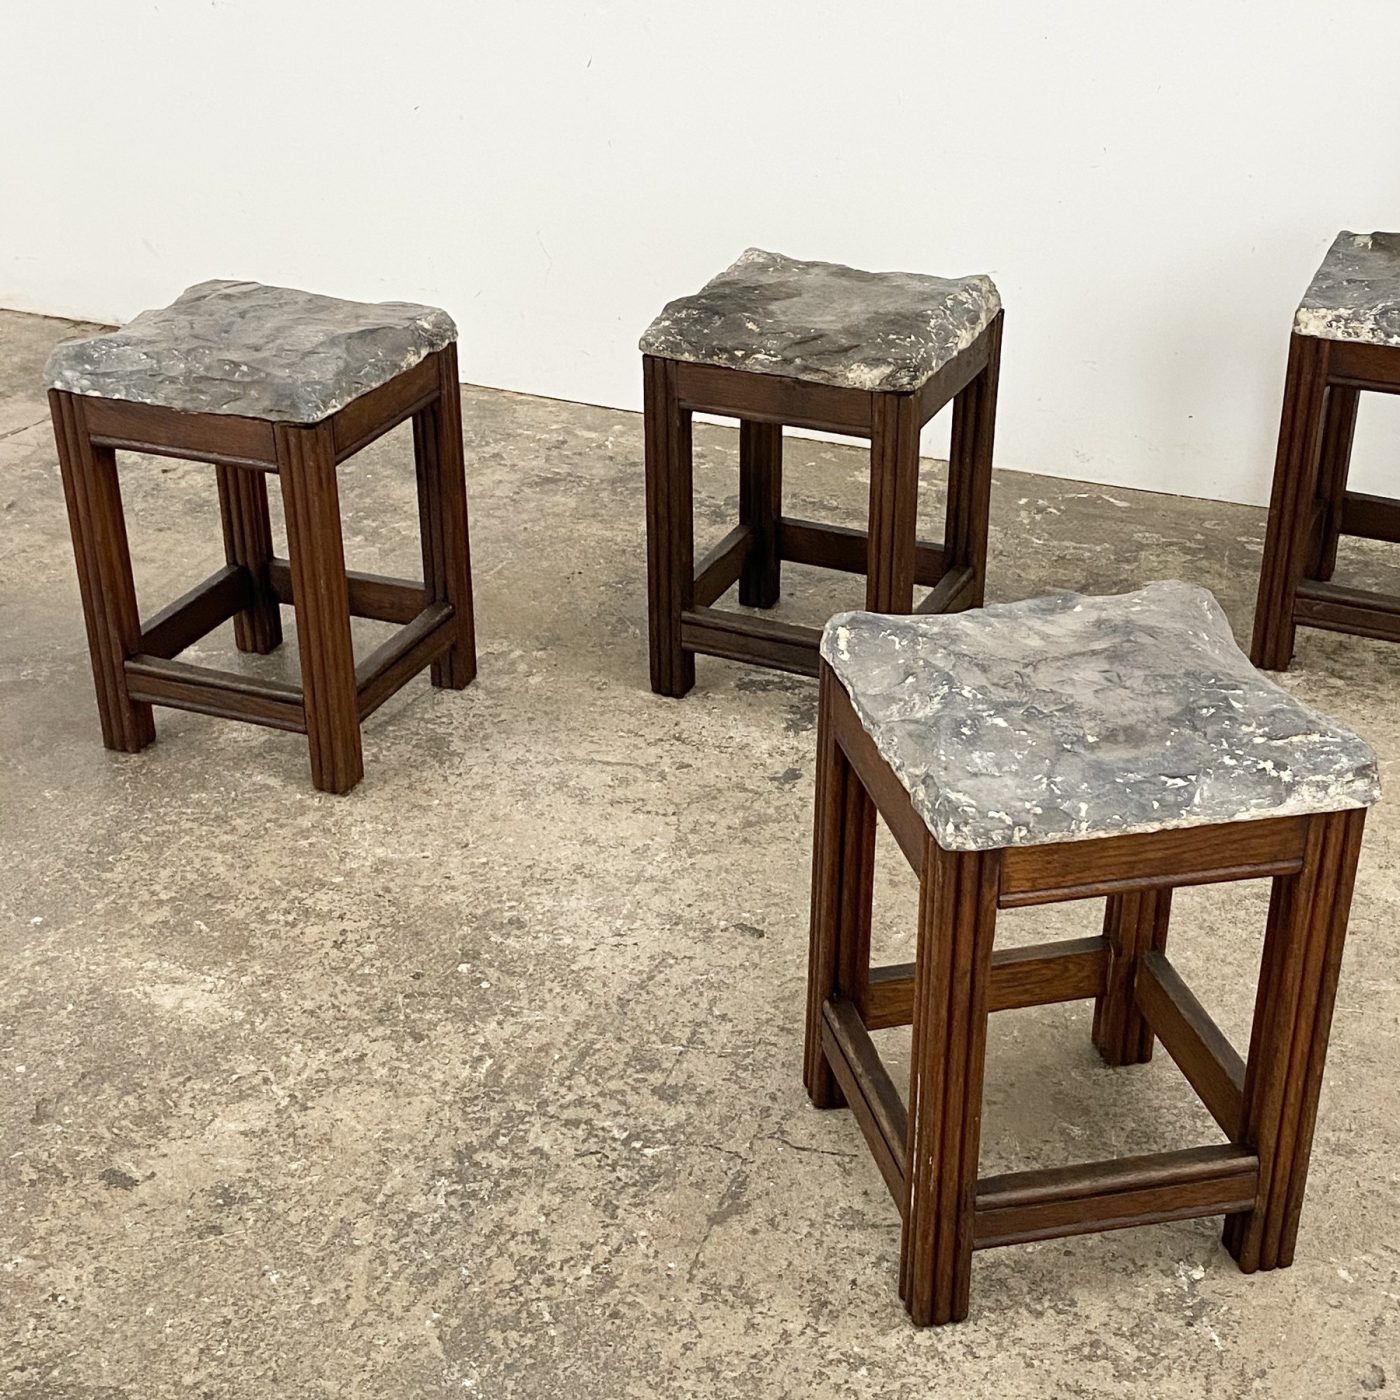 objet-vagabond-stone-tables0005